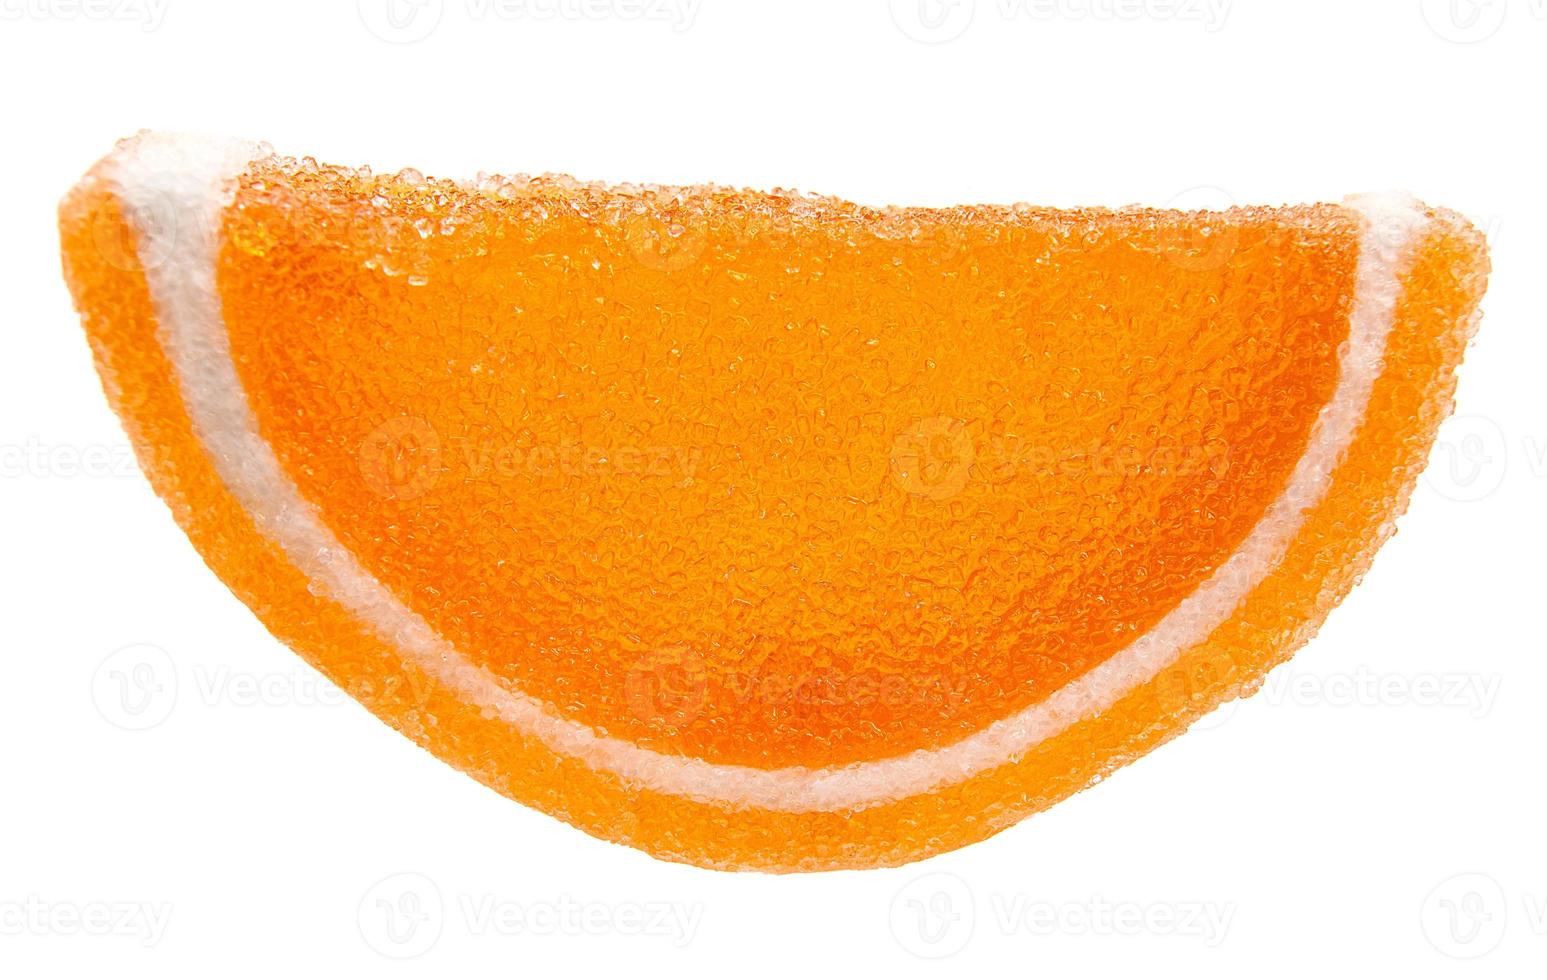 caramelo de mermelada en forma de rodaja de naranja. foto